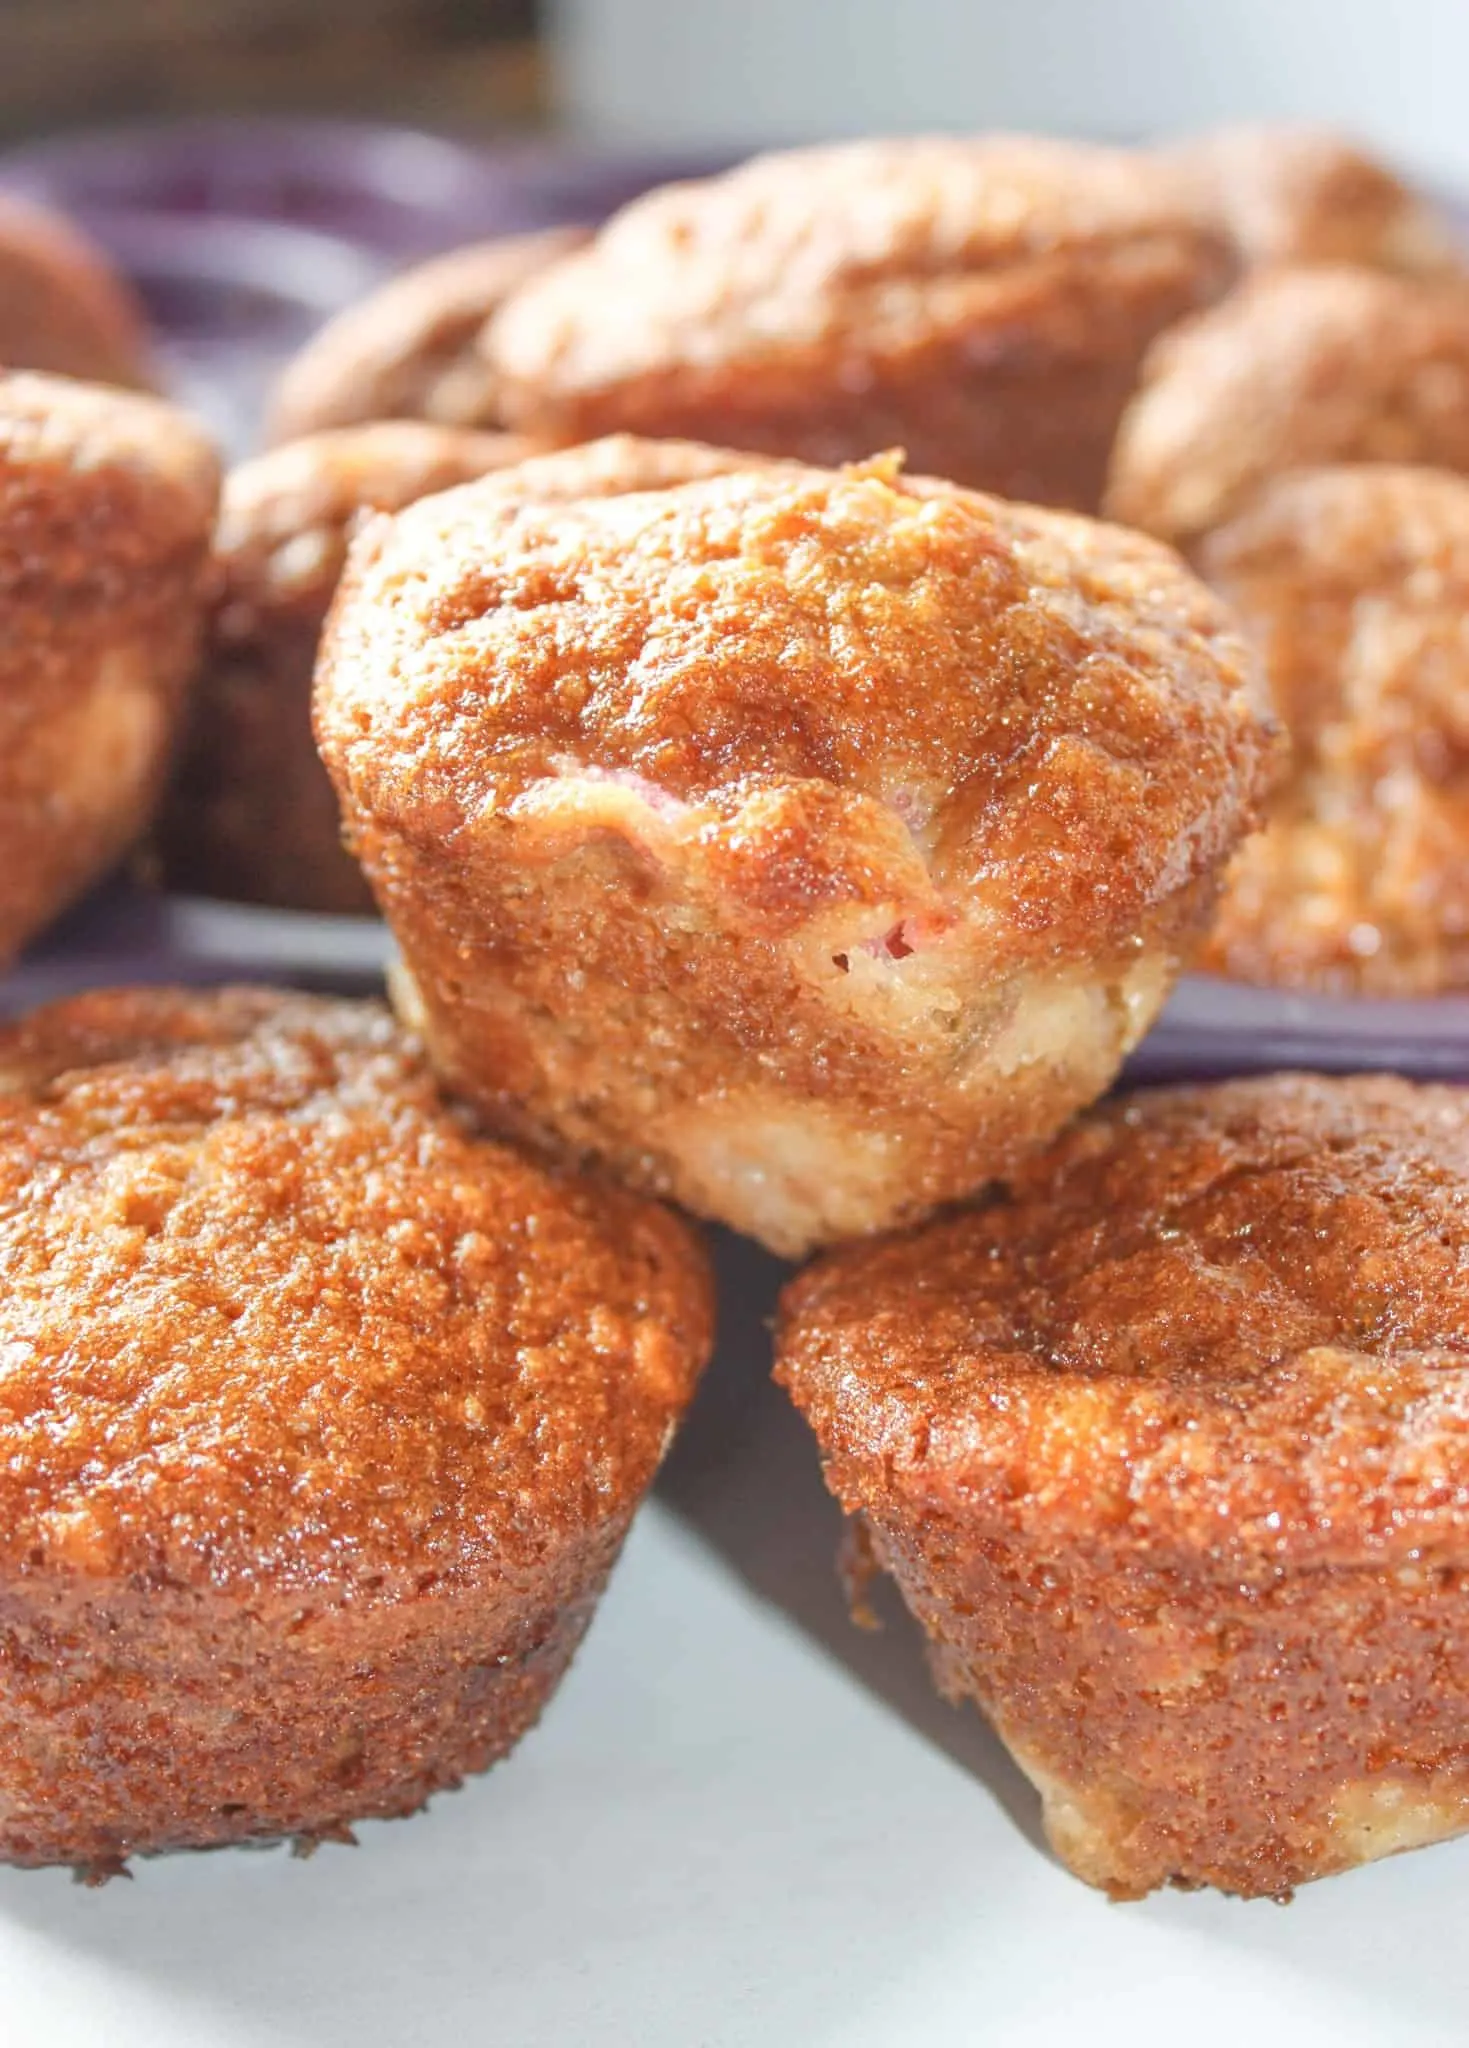 How to Make Gluten Free Rhubarb Muffins - Kiss Gluten Goodbye